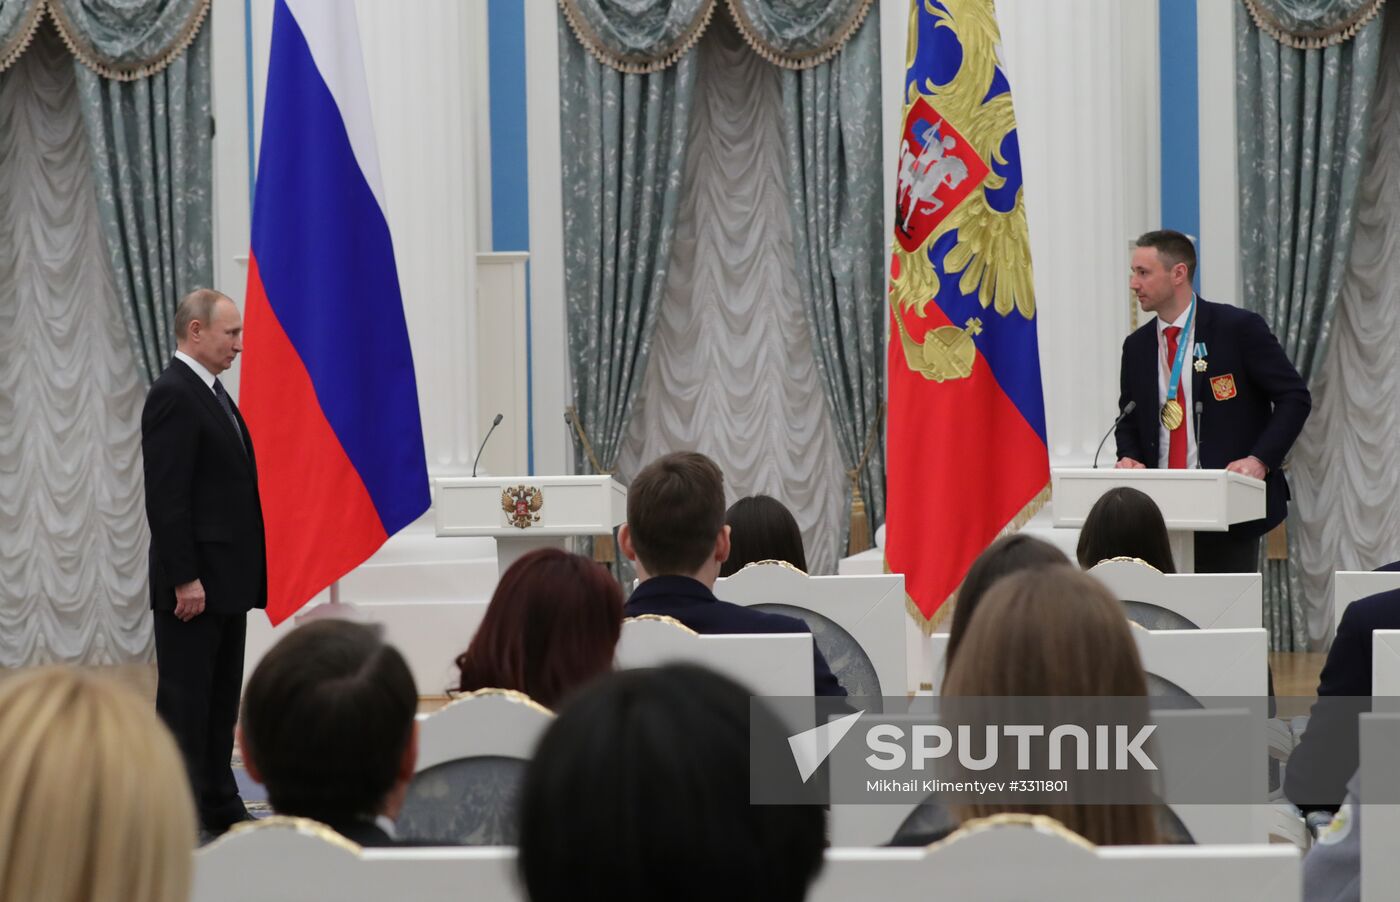 President Vladimir Putin presents state decorations to 2018 Winter Olympics medalists